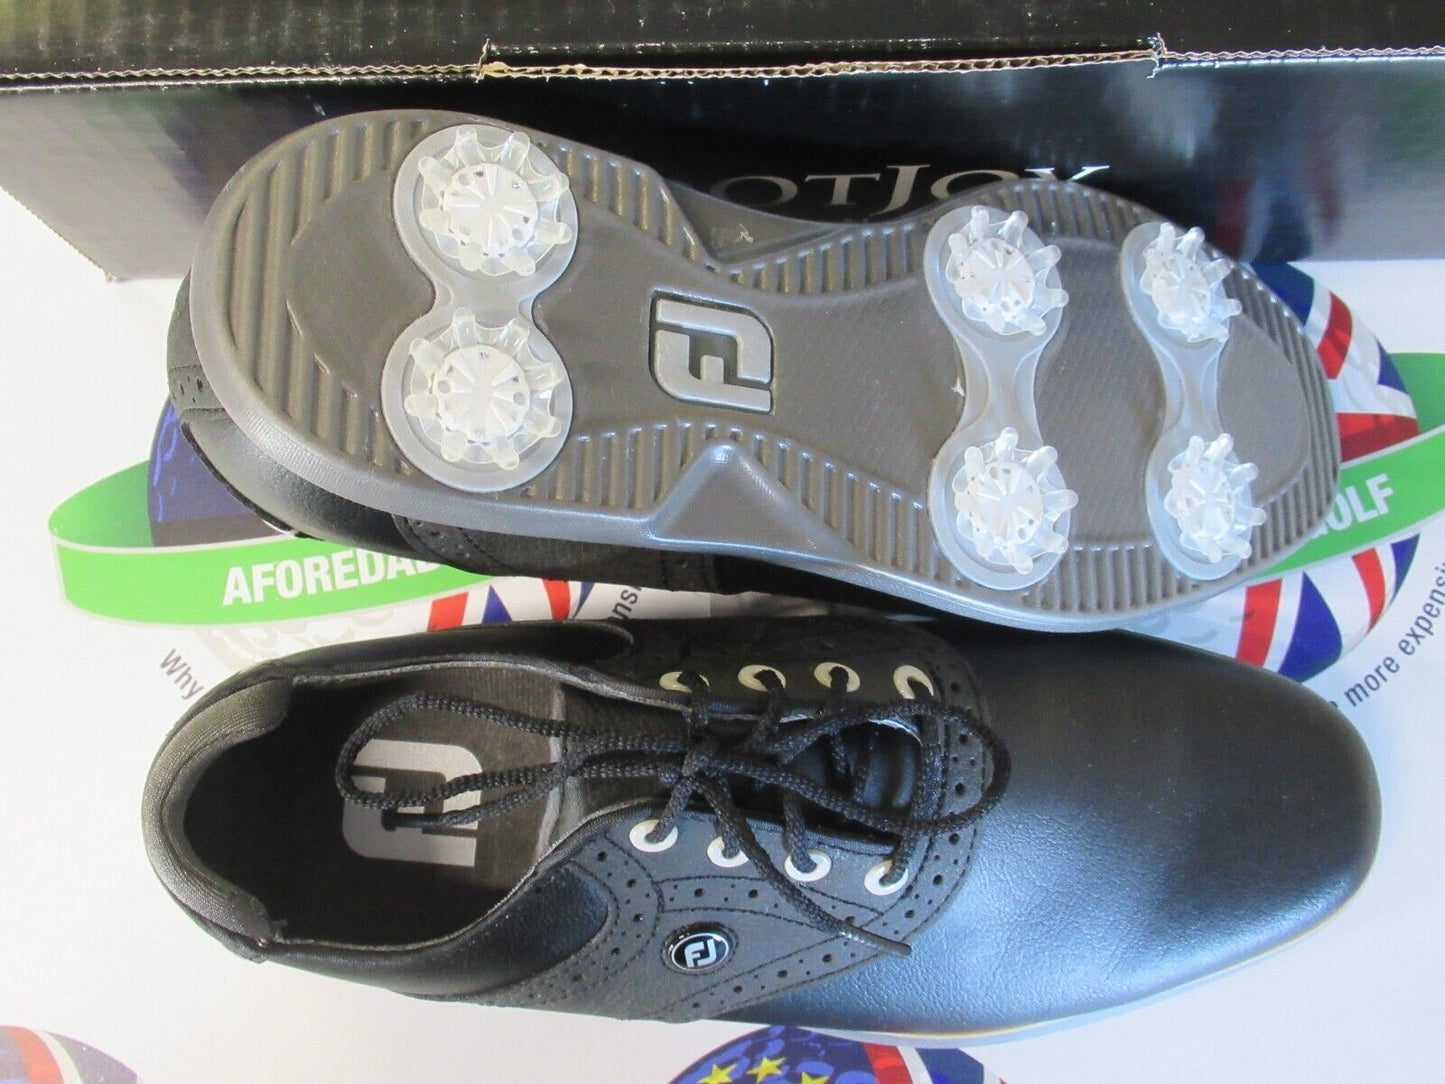 footjoy fj traditions womens golf shoes 97908k black uk size 4.5 wide/large